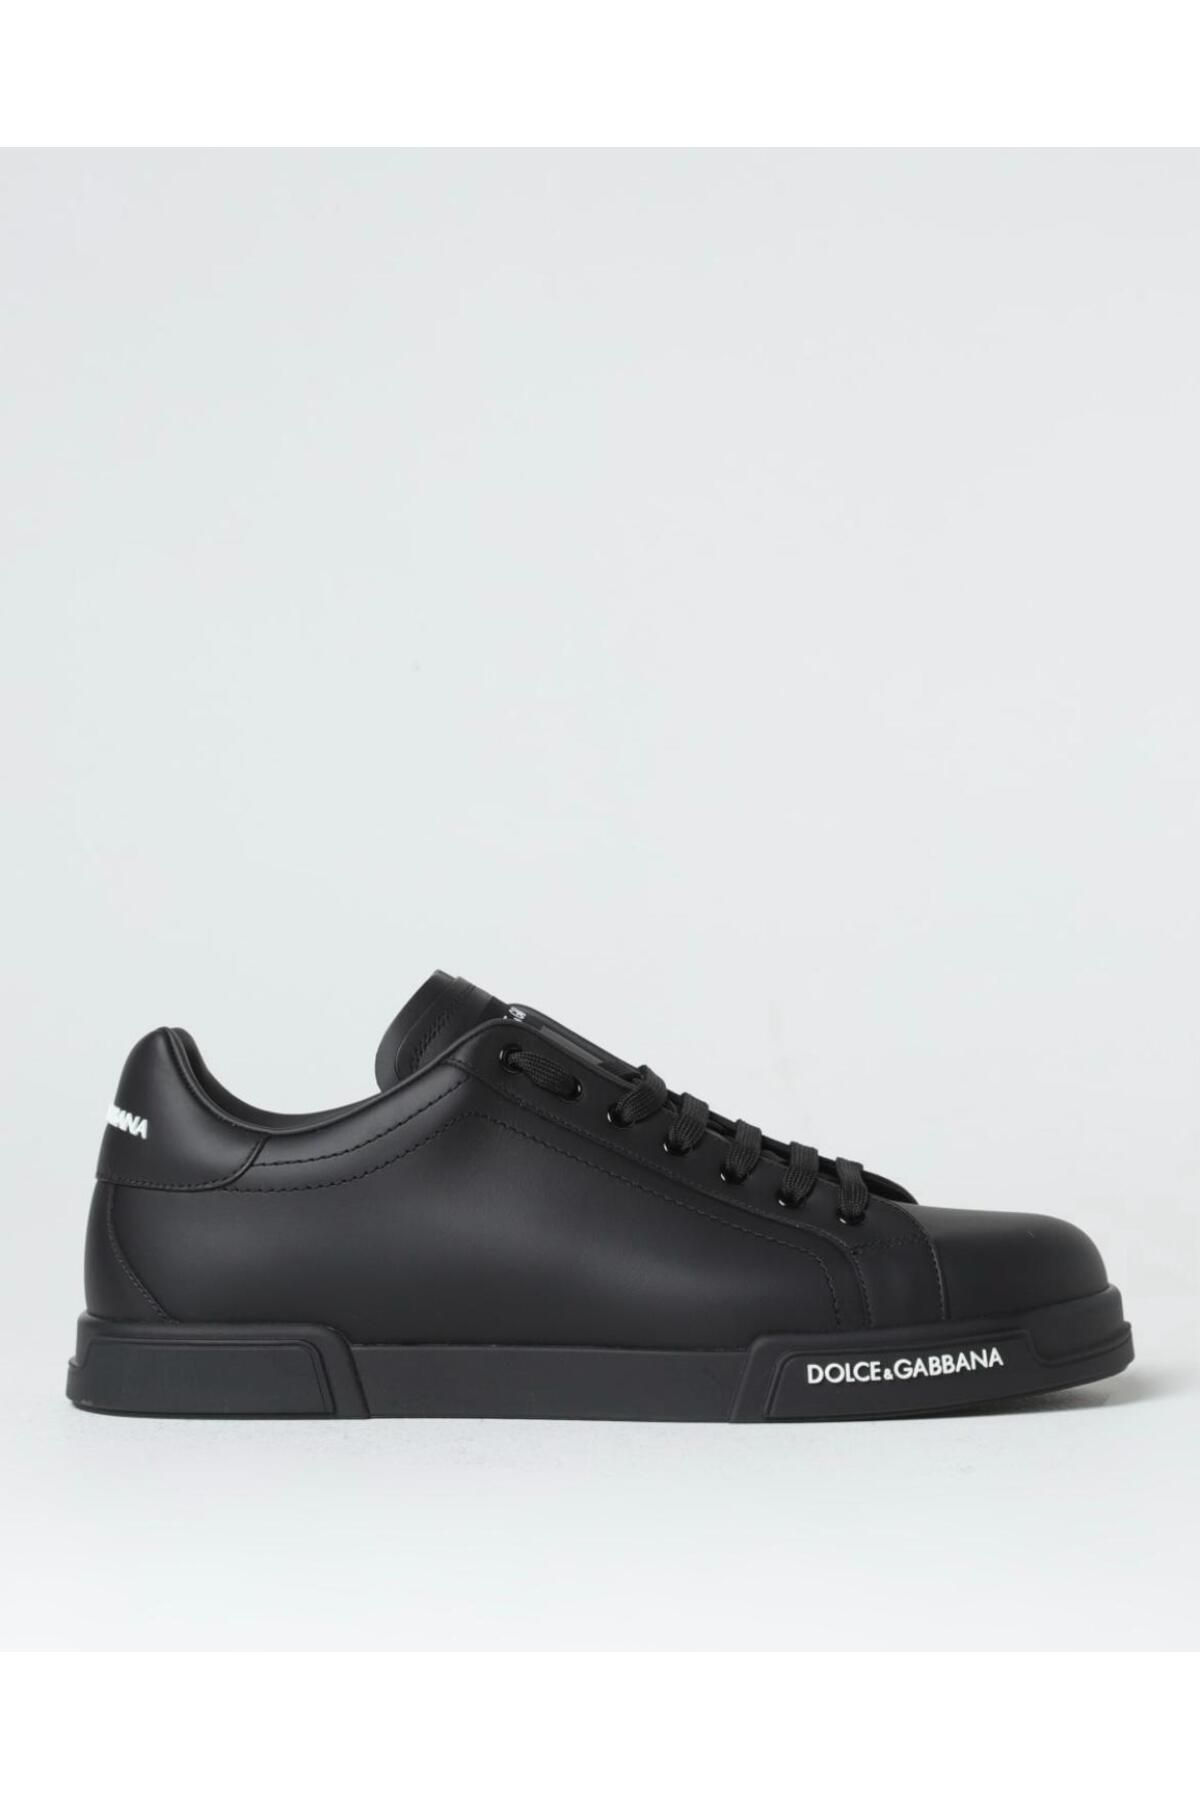 Dolce&Gabbana Calfskin Nappa Portofino Sneakers